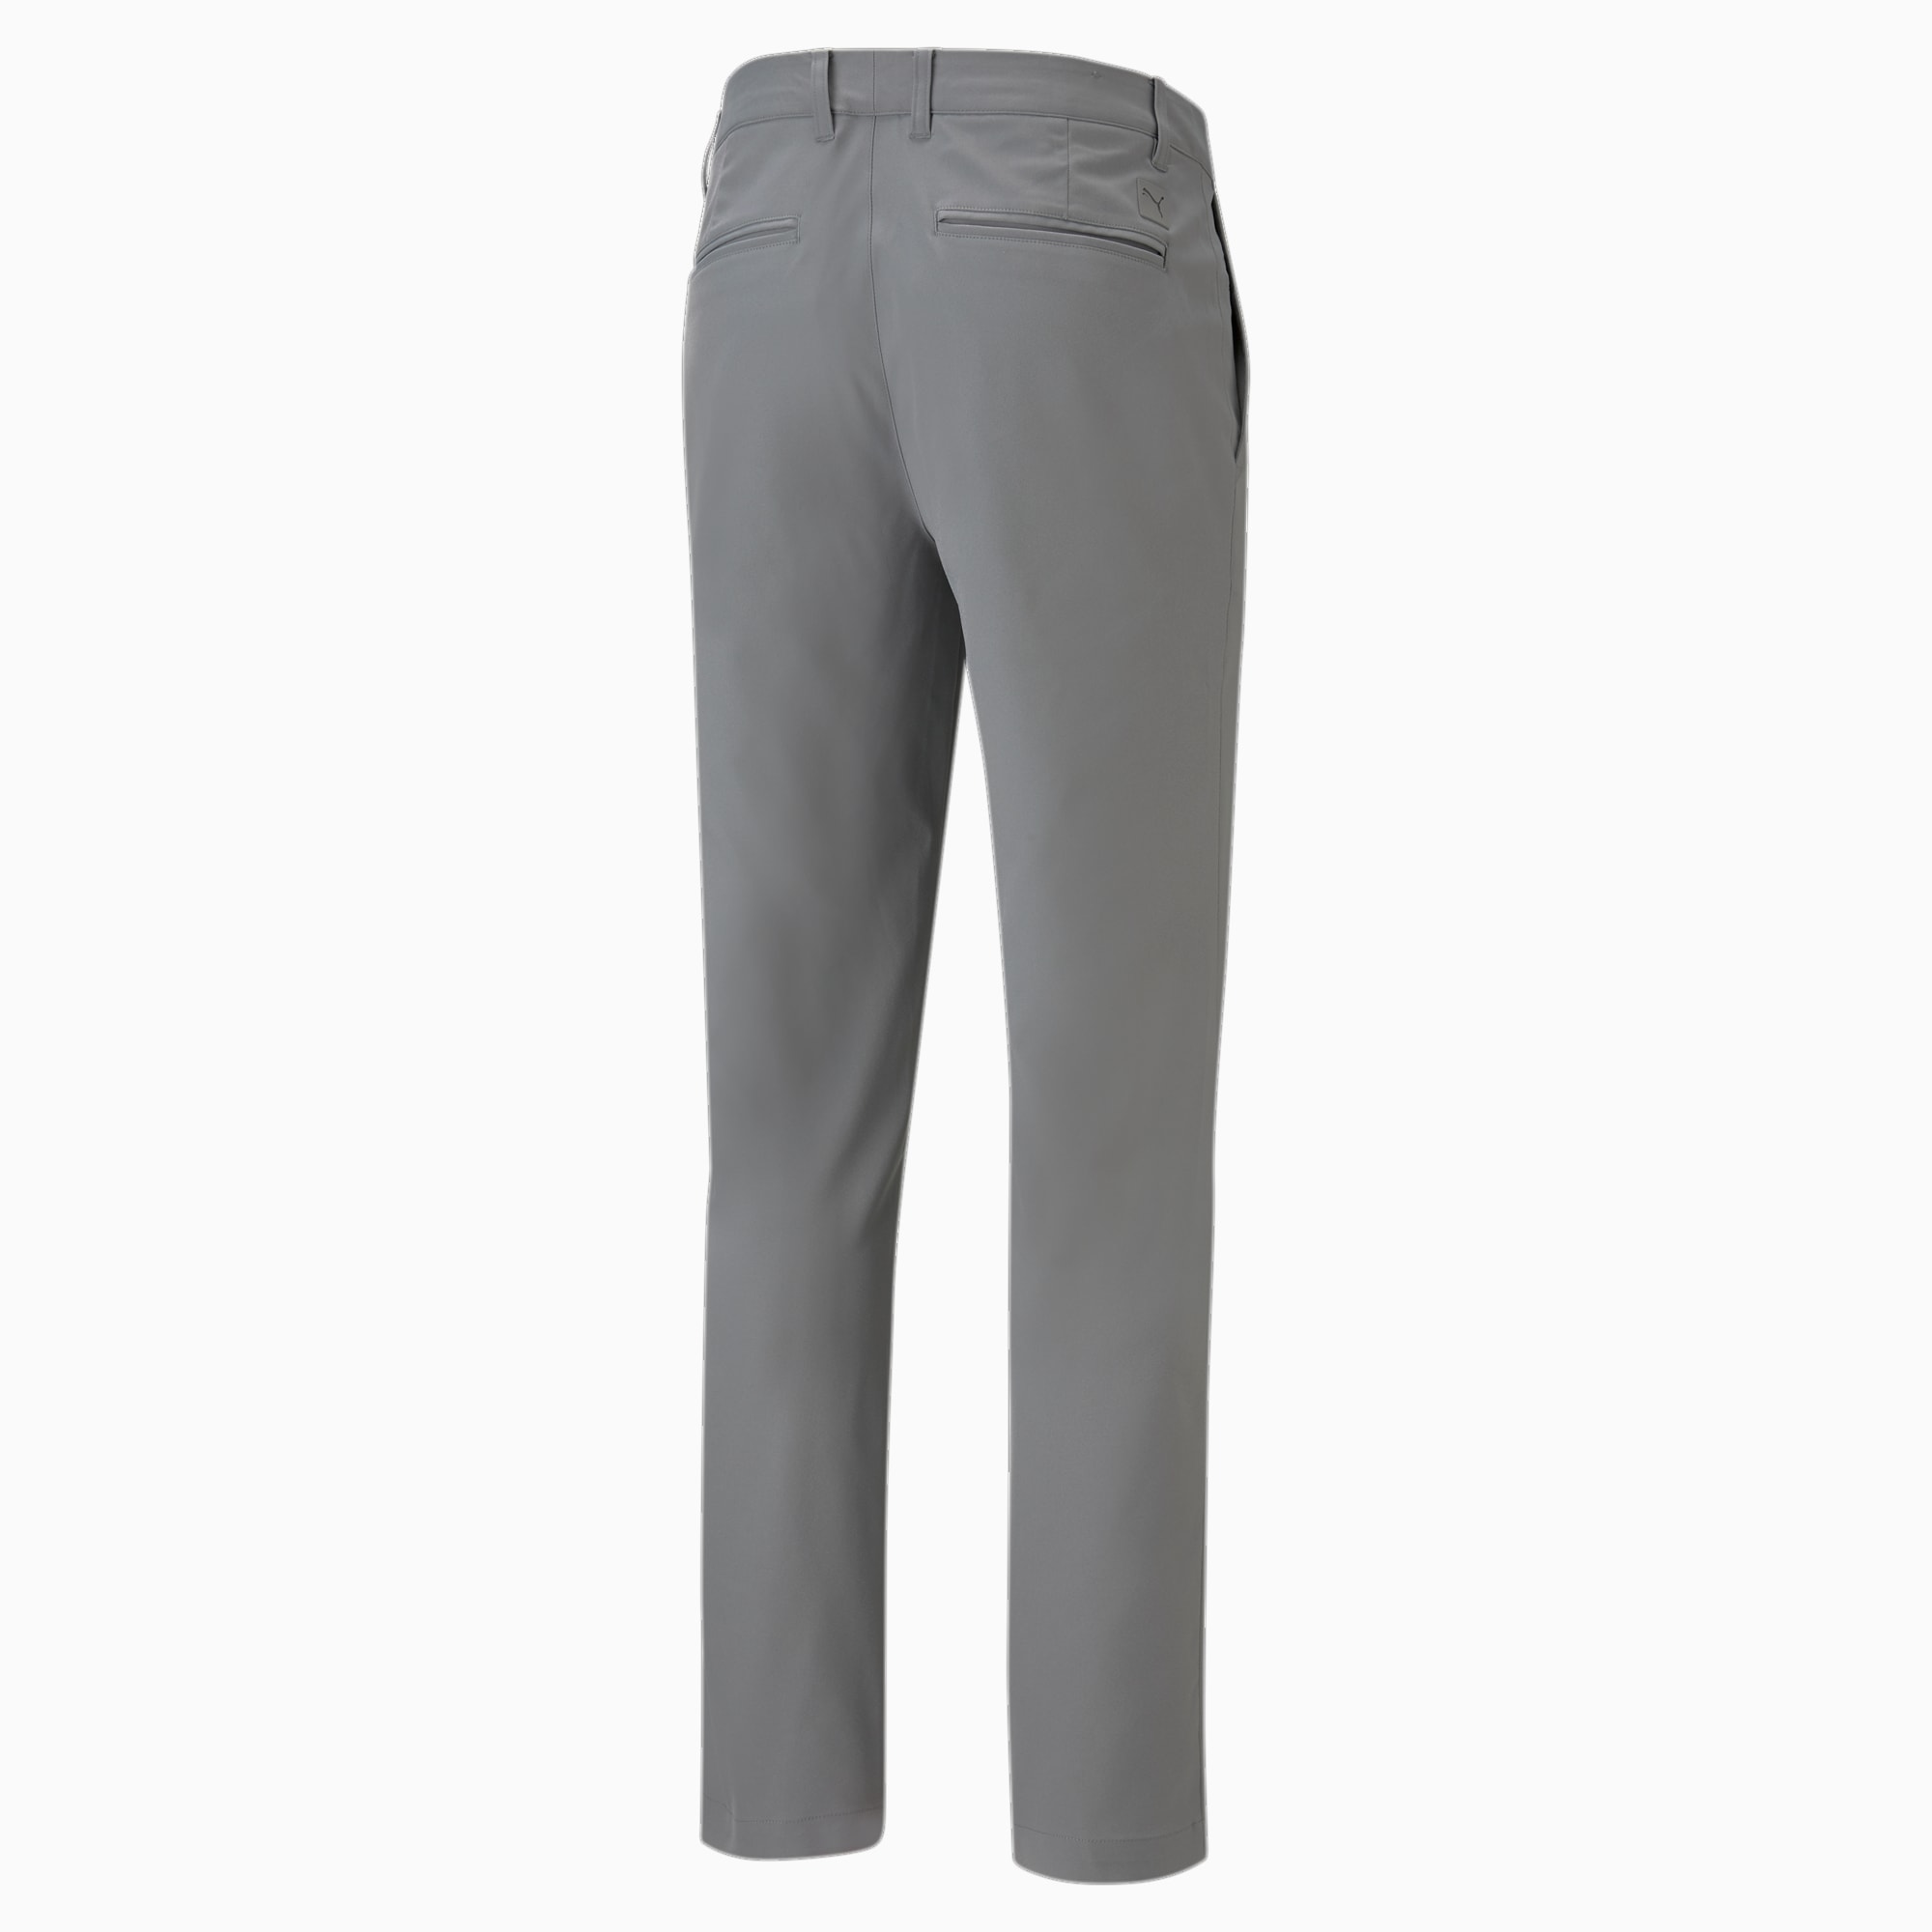 PUMA Dealer Tailored Golf Pants Men, Slate Sky, Size 40/36, Clothing